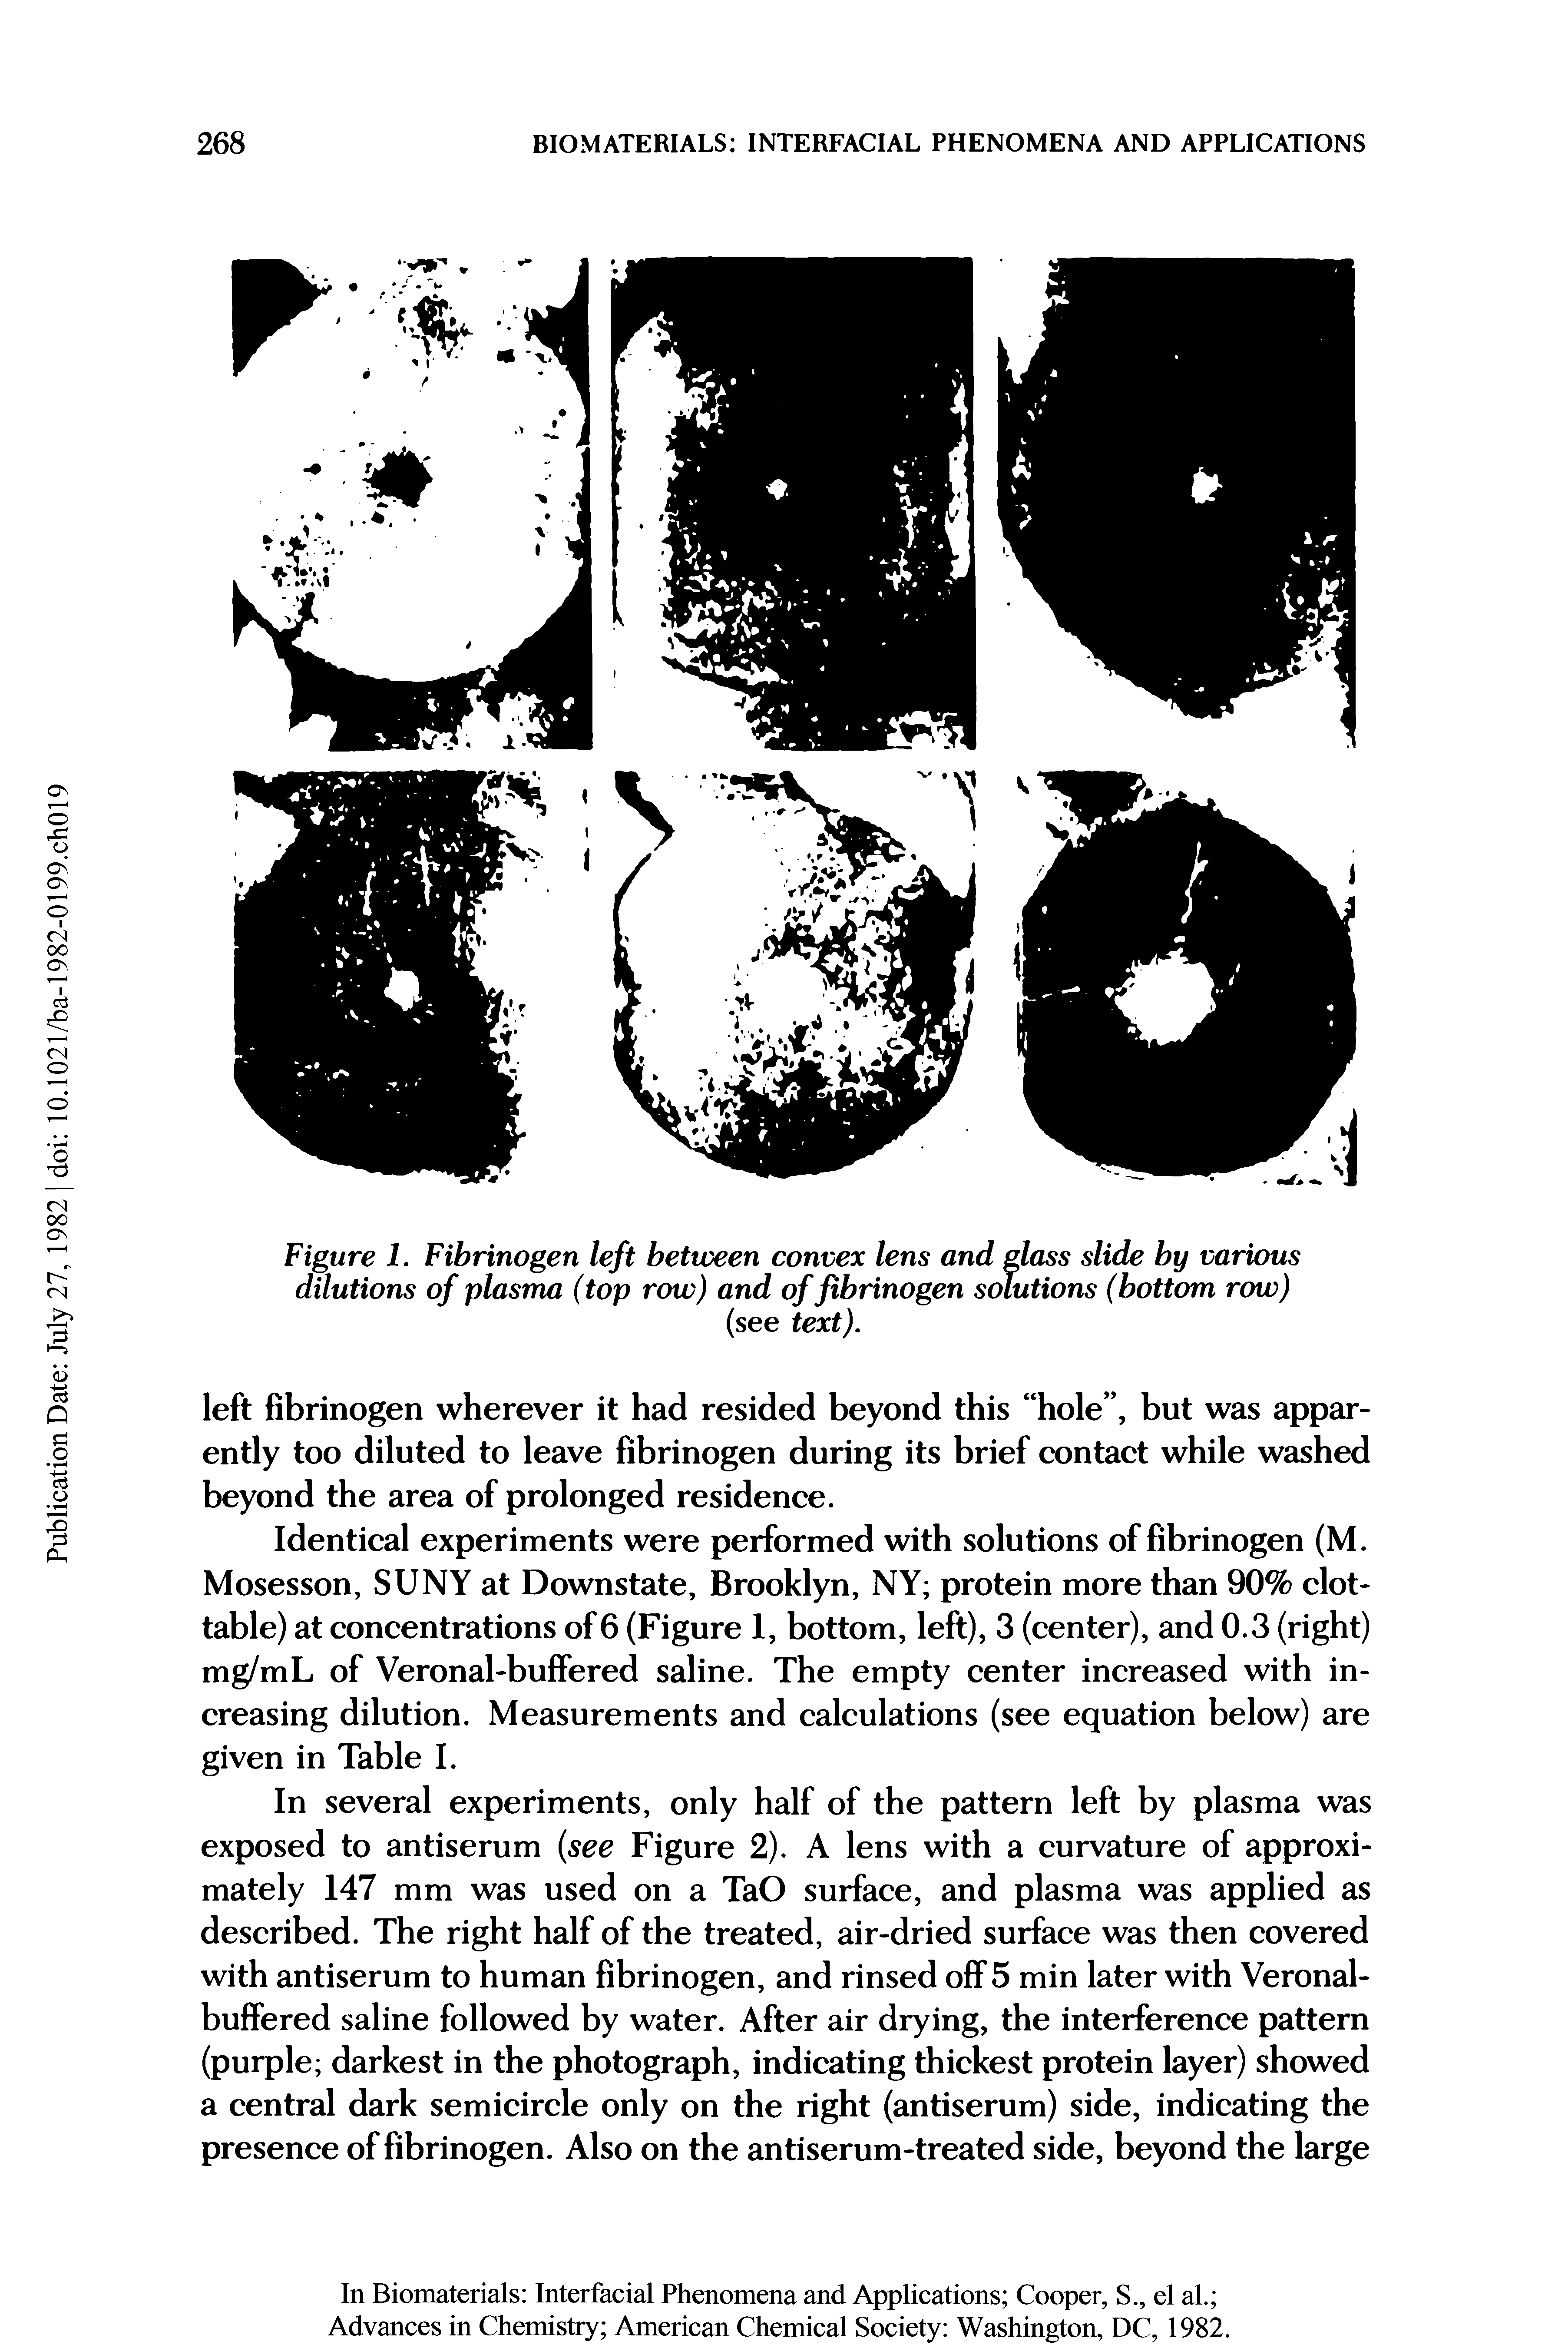 Figure 1. Fibrinogen left between convex lens and glass slide by various dilutions of plasma (top row) and of fibrinogen solutions (bottom row)...